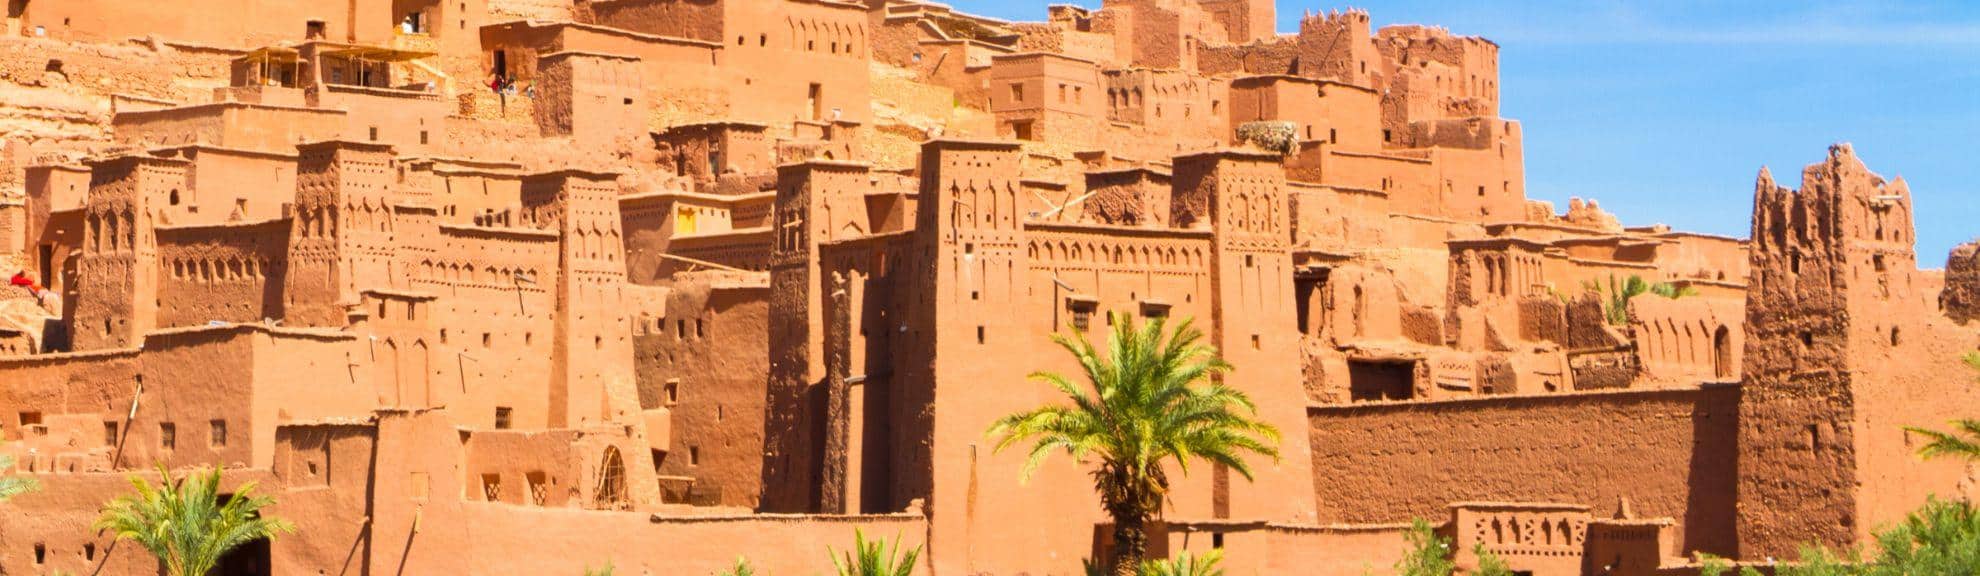 Excursion Ouarzazate depuis Marrakech – Ait Ben Haddou  21,25 €  /pers.